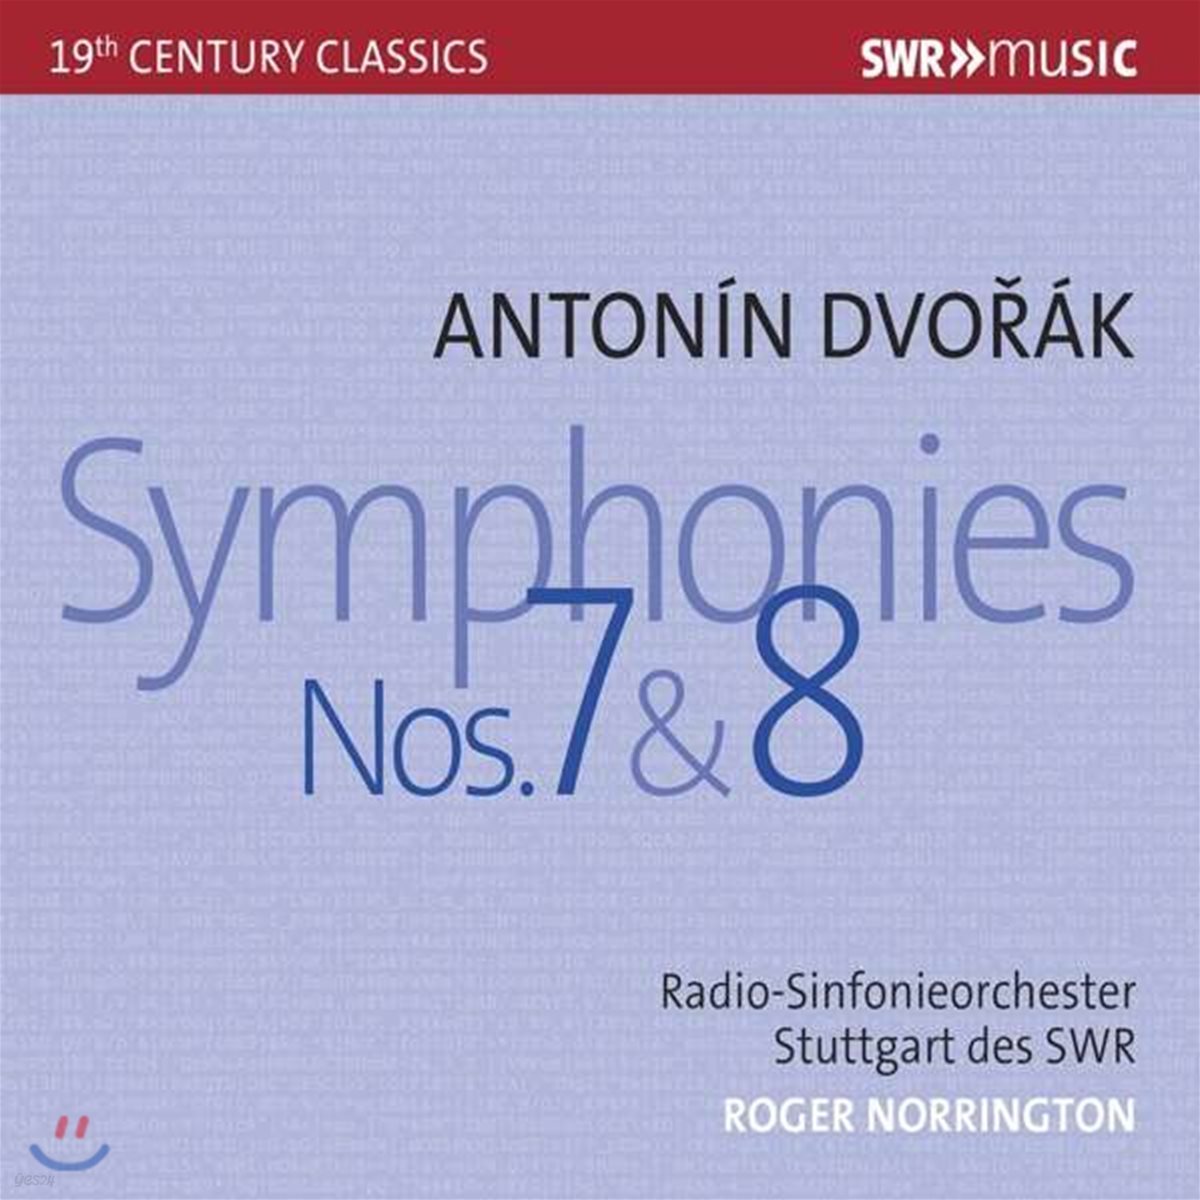 Roger Norrington 드보르작: 교향곡 7 & 8번 (Dvorak: Symphonies Nos. 7 & 8)